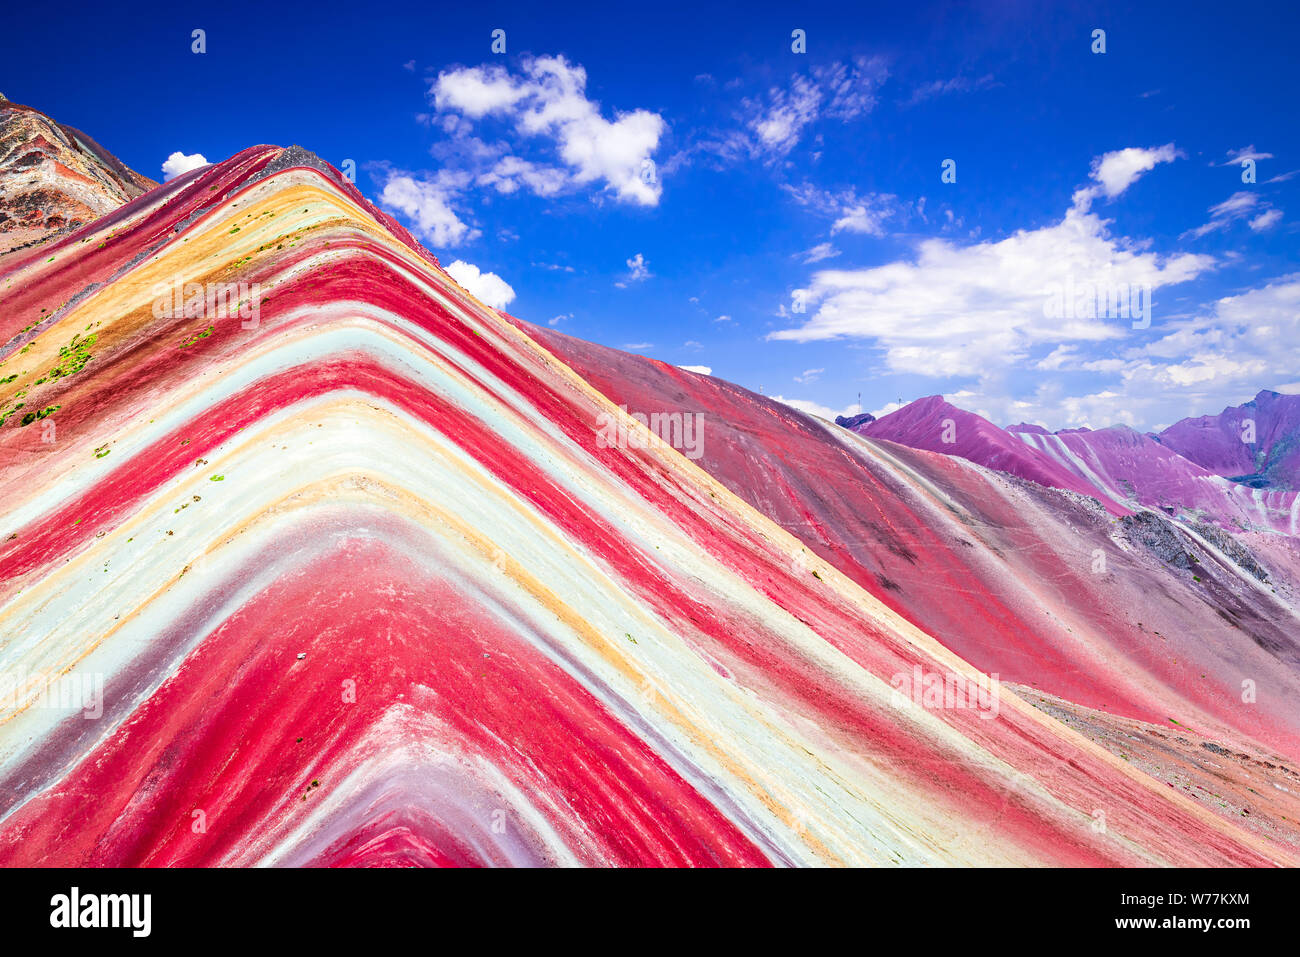 Vinicunca, Peru - Rainbow Mountain, Cordillera de los Andes, Cusco region in South America. Stock Photo